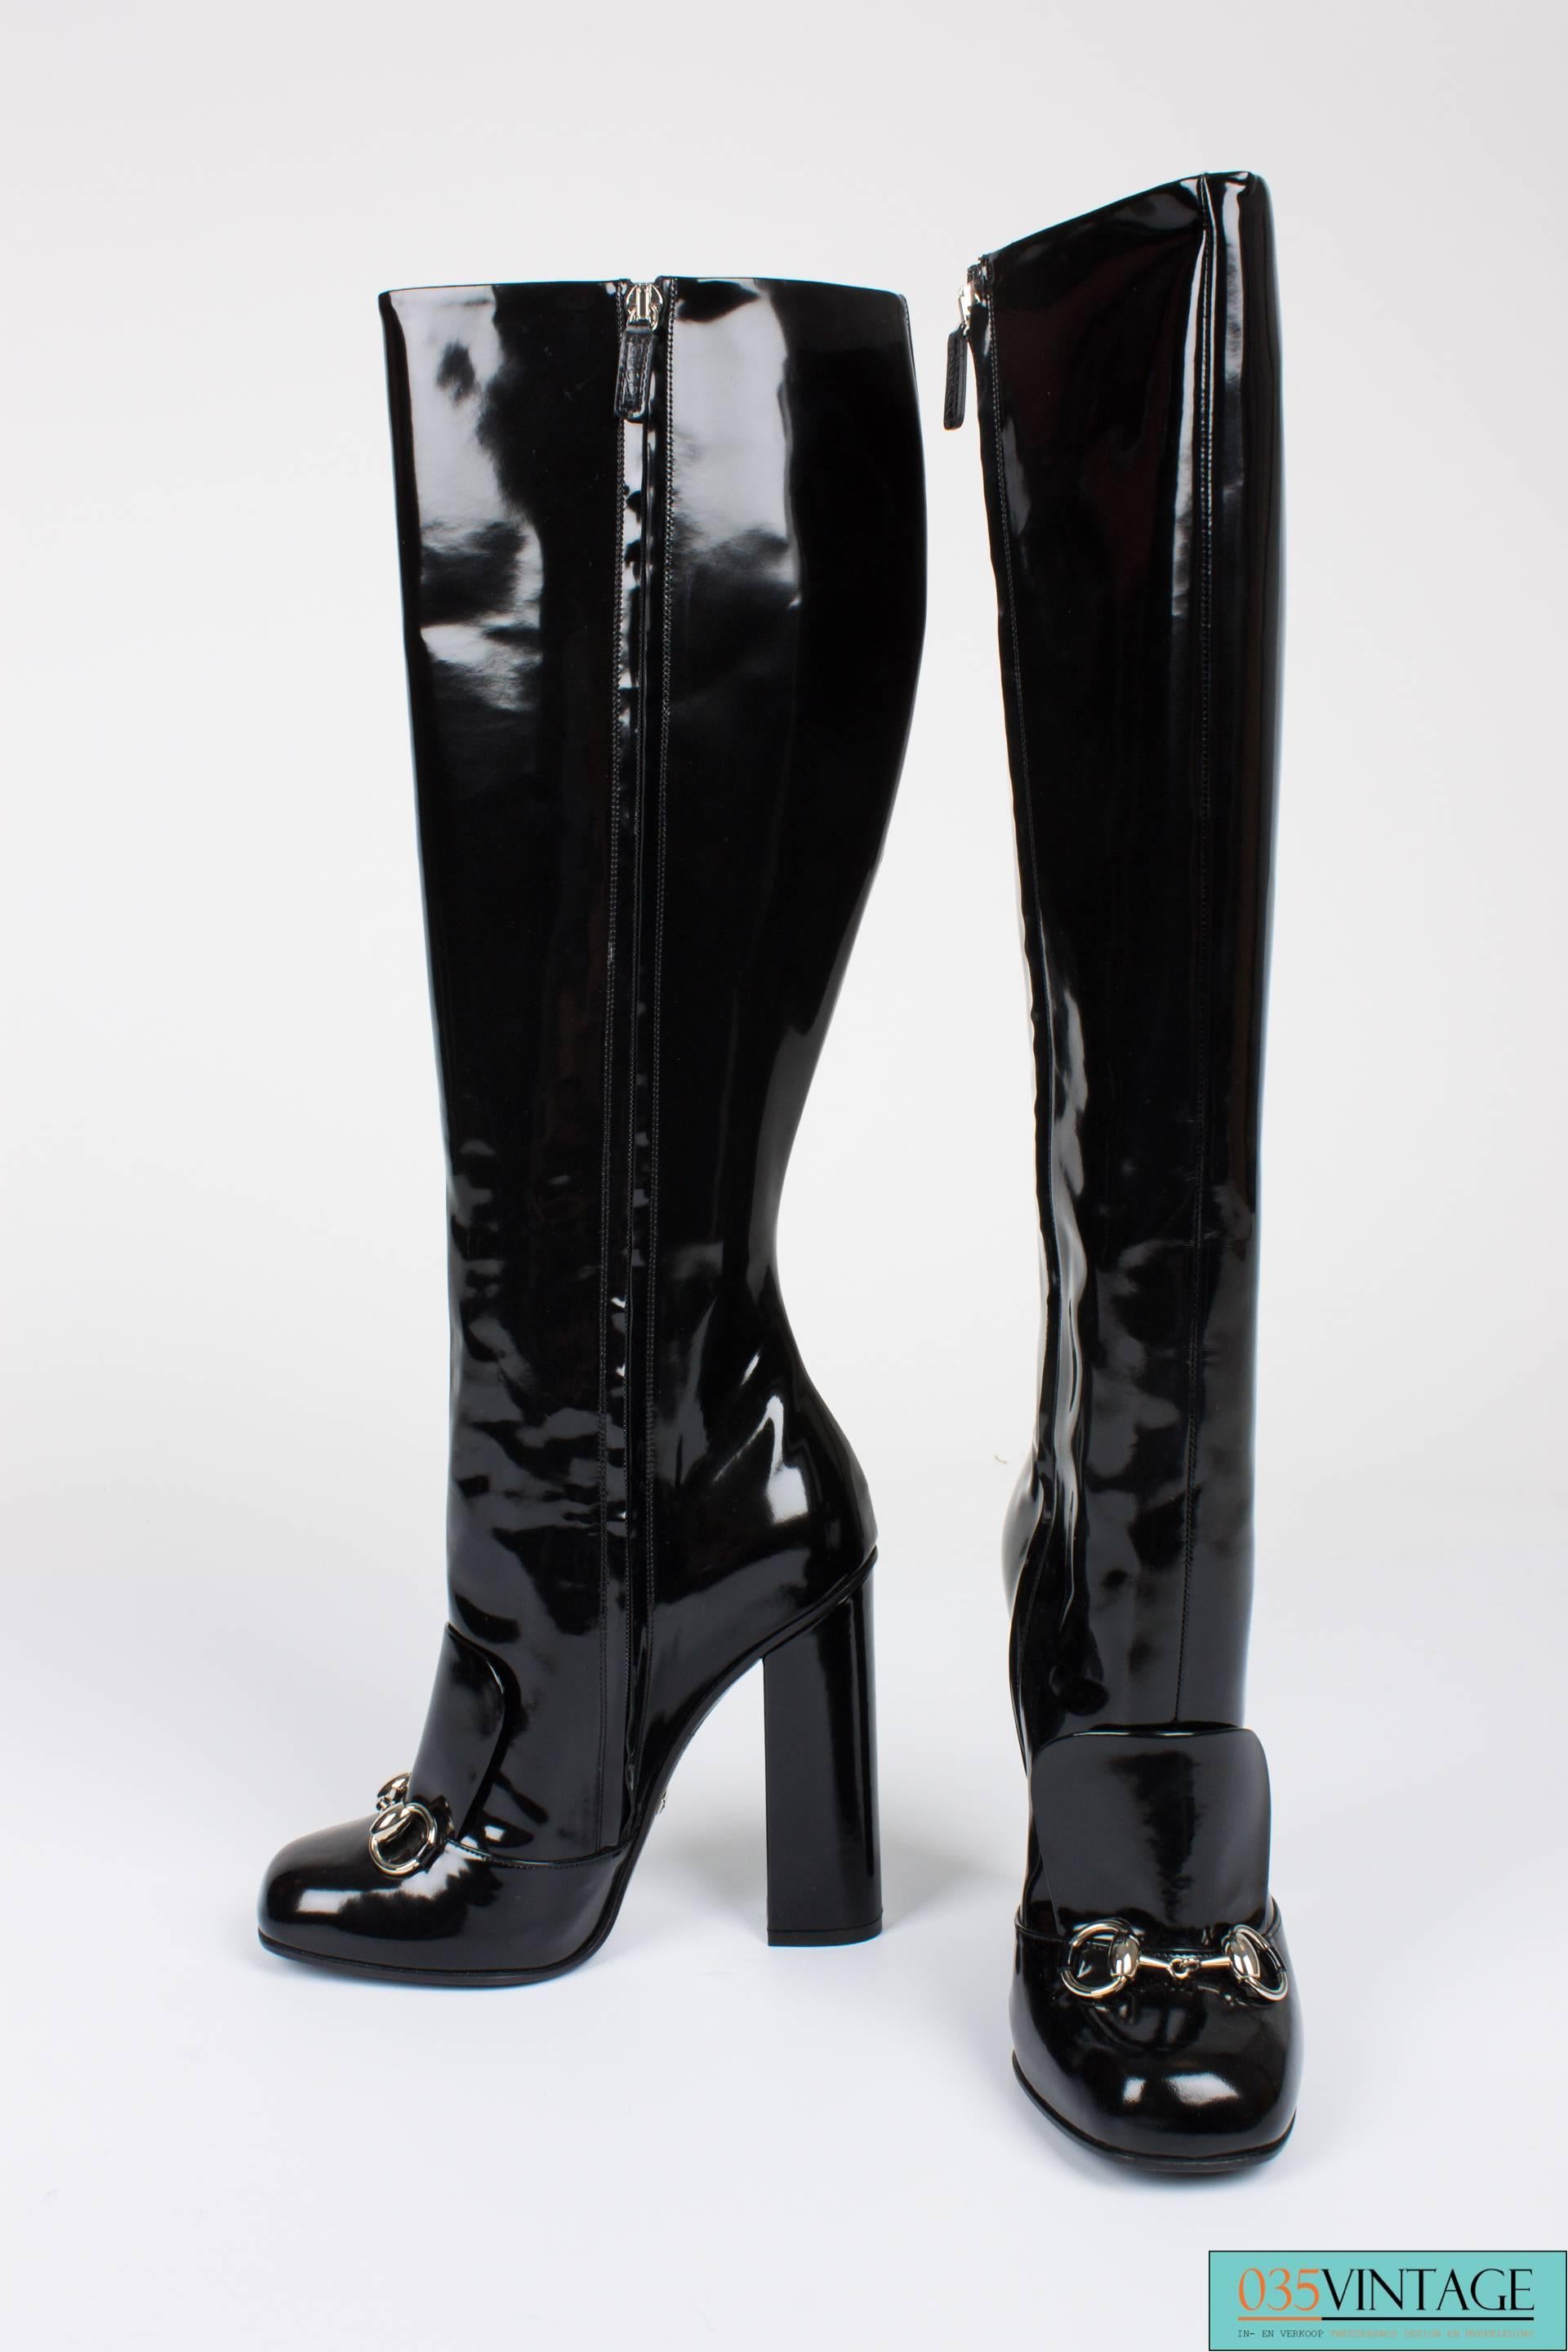 Gucci Lillian Horsebit Boots - black patent leather